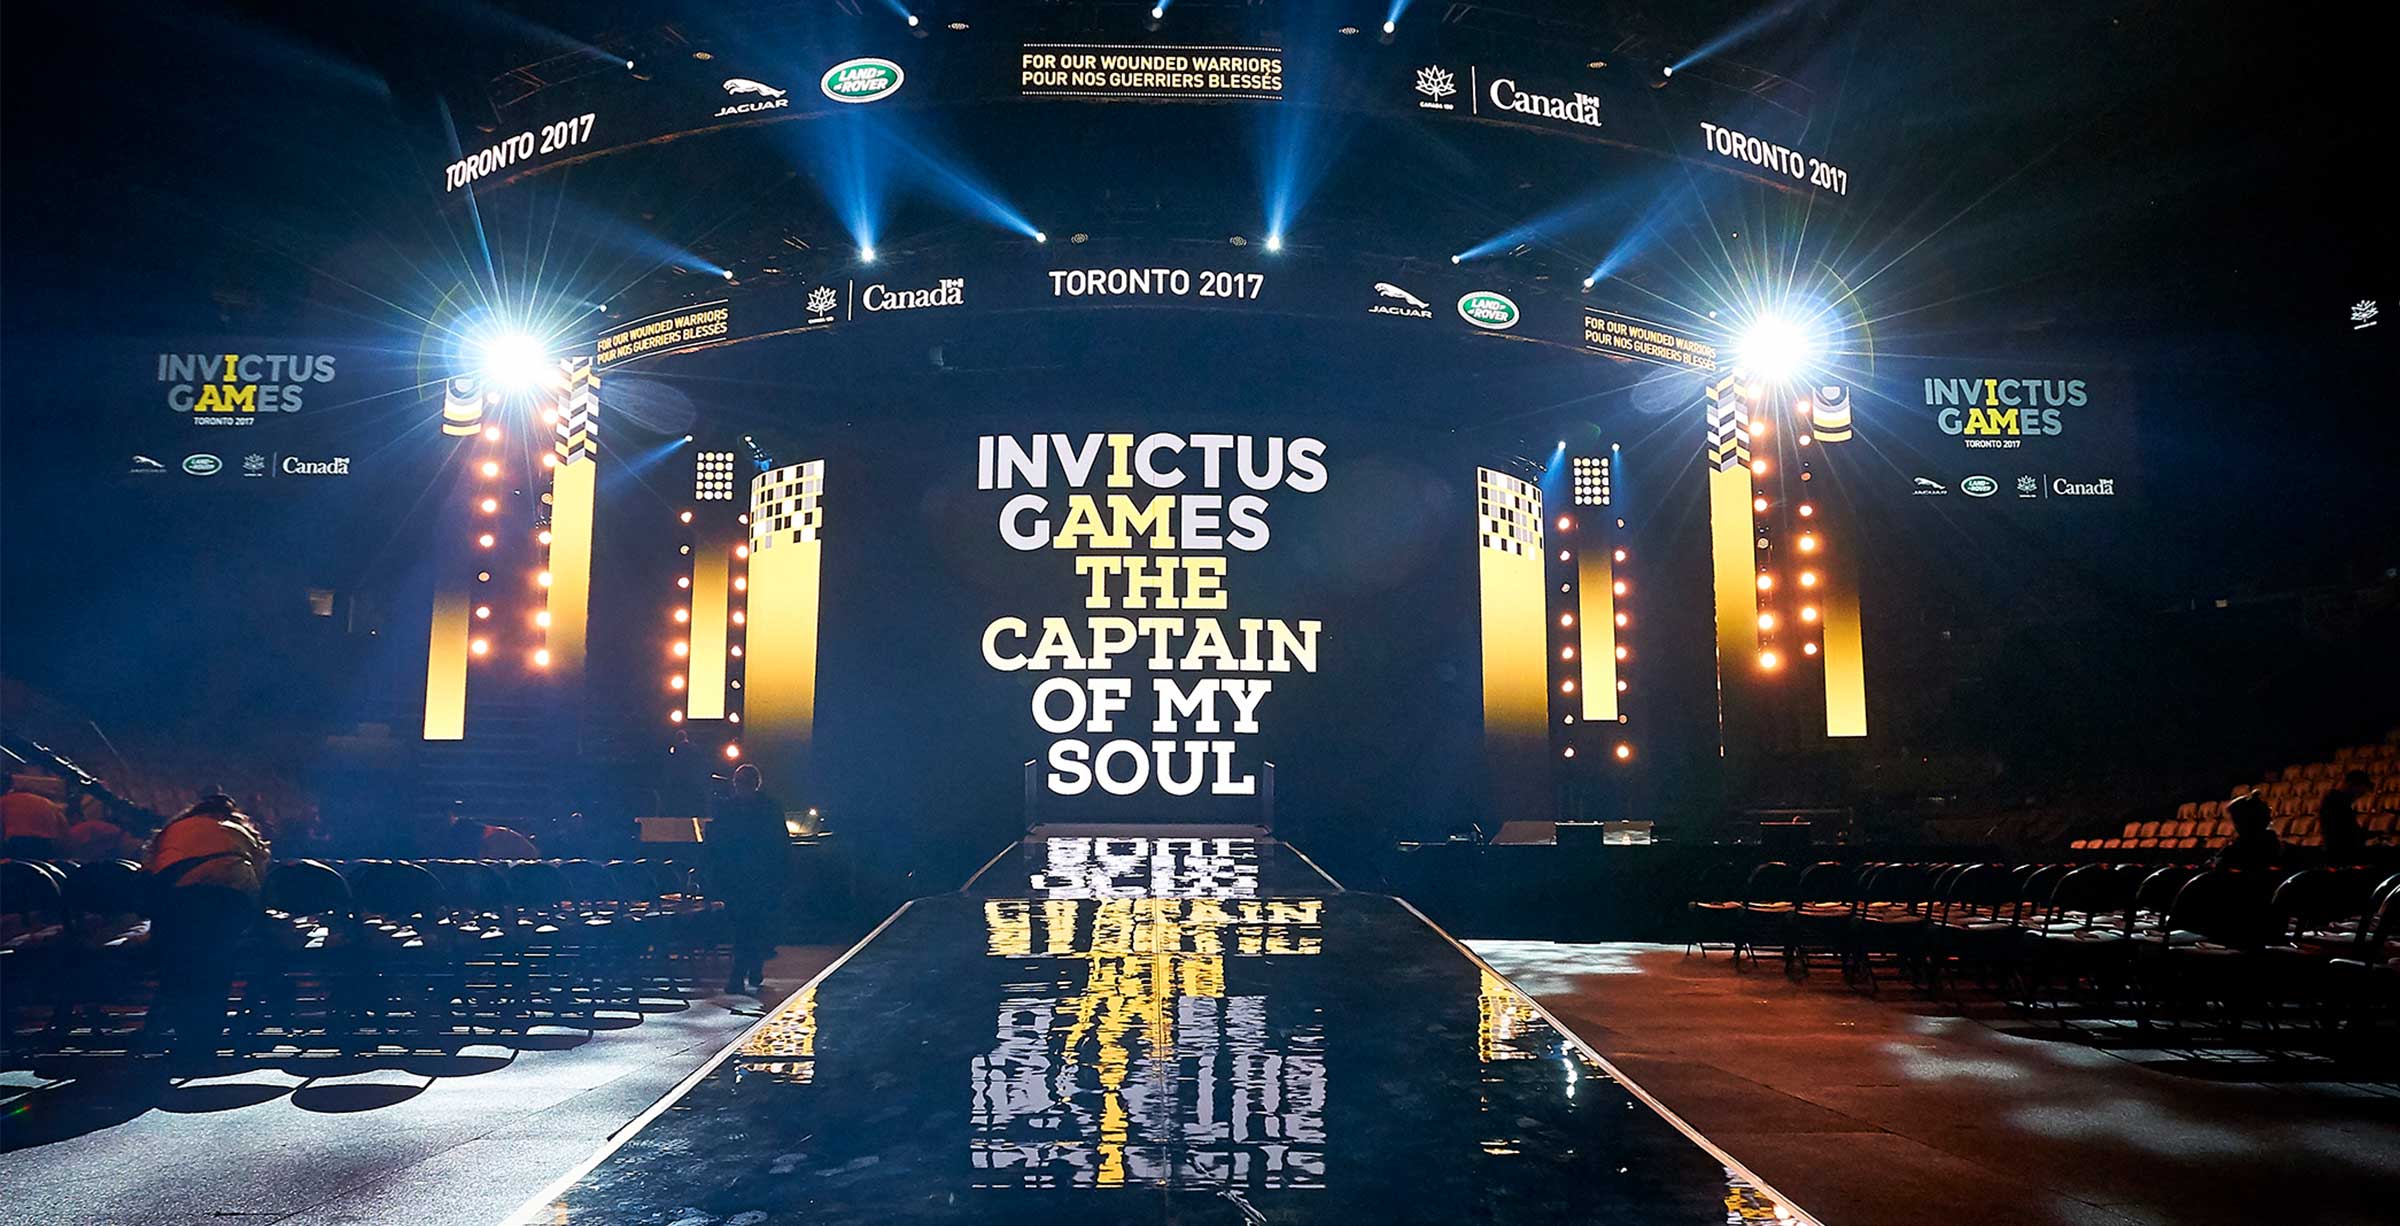 The 2017 Invictus Games